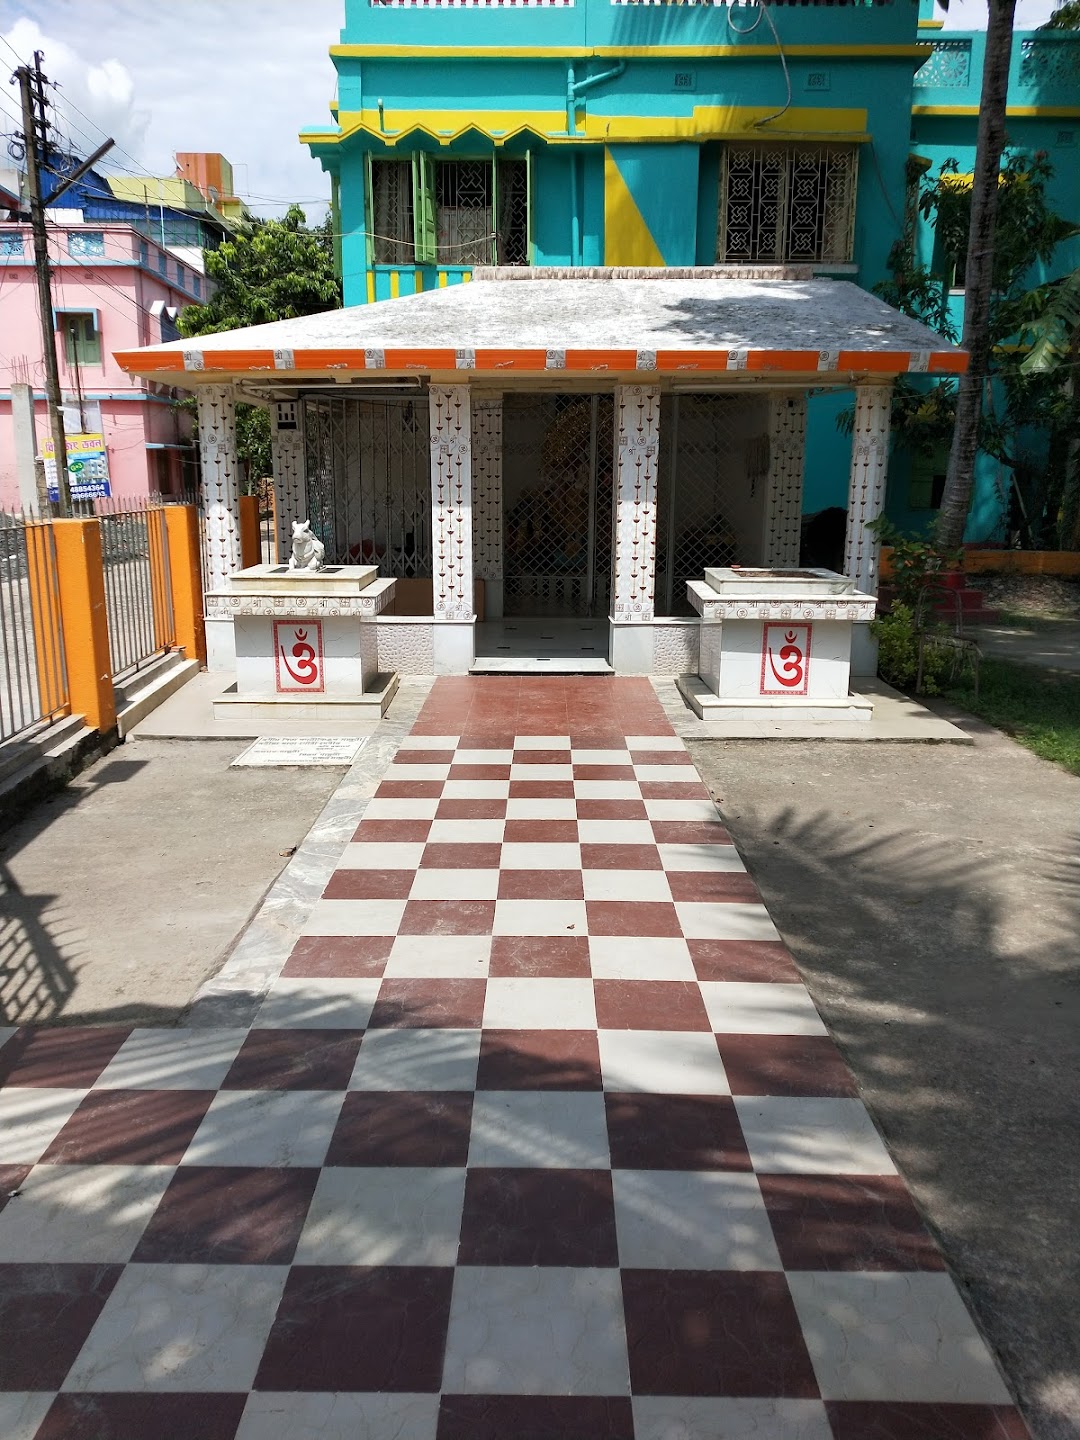 Lord Shib Kali Temple